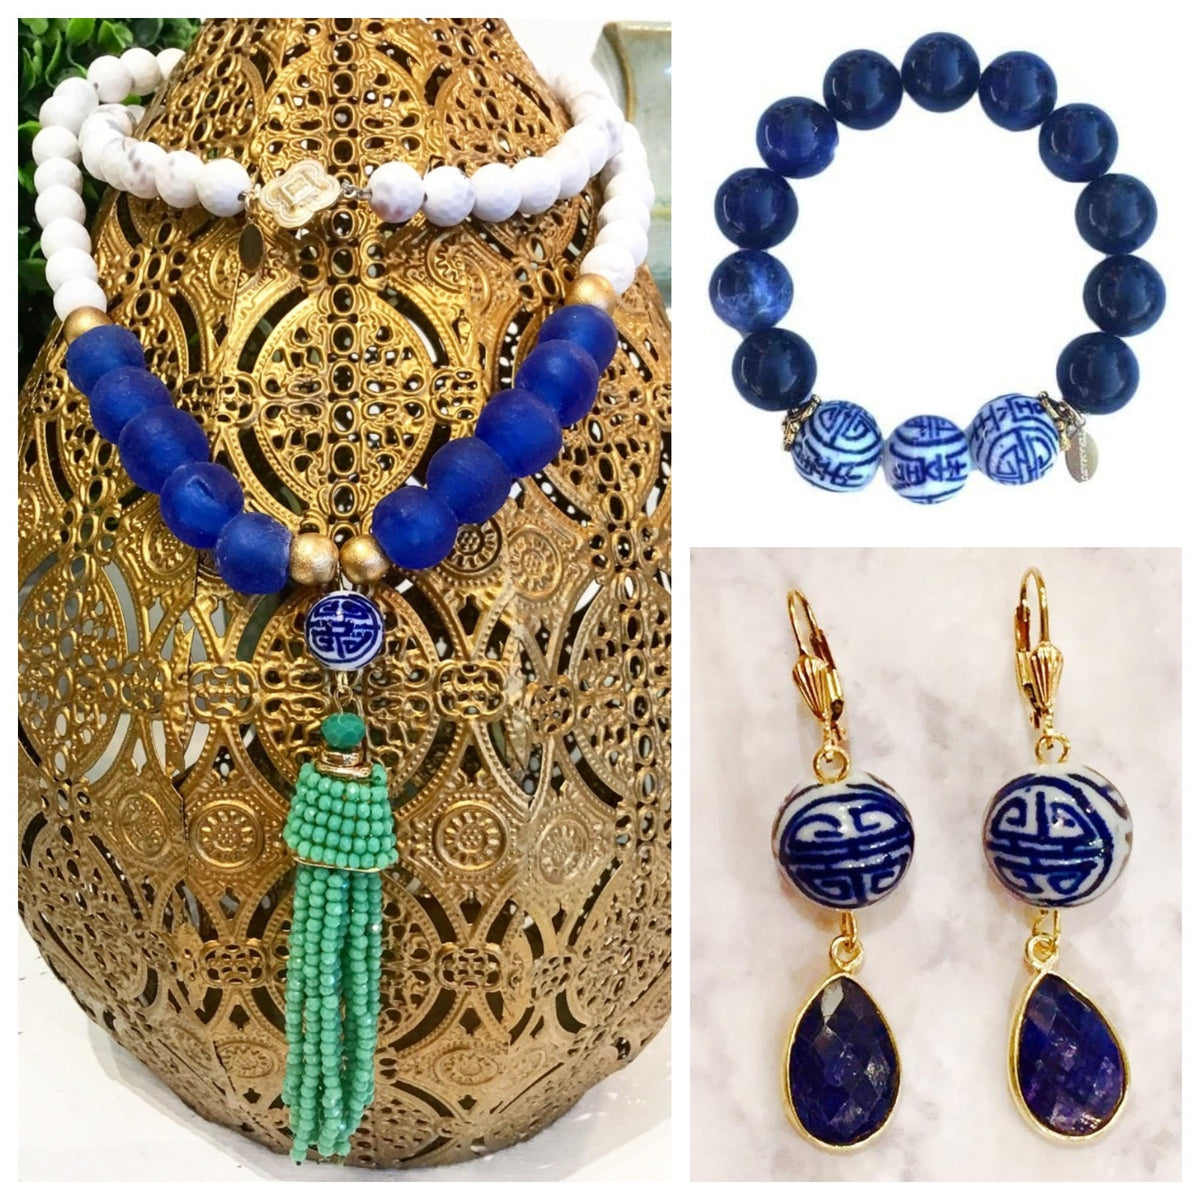 Chic Peek: The Perfect Blue & White Jewelry Combination from Teramasu